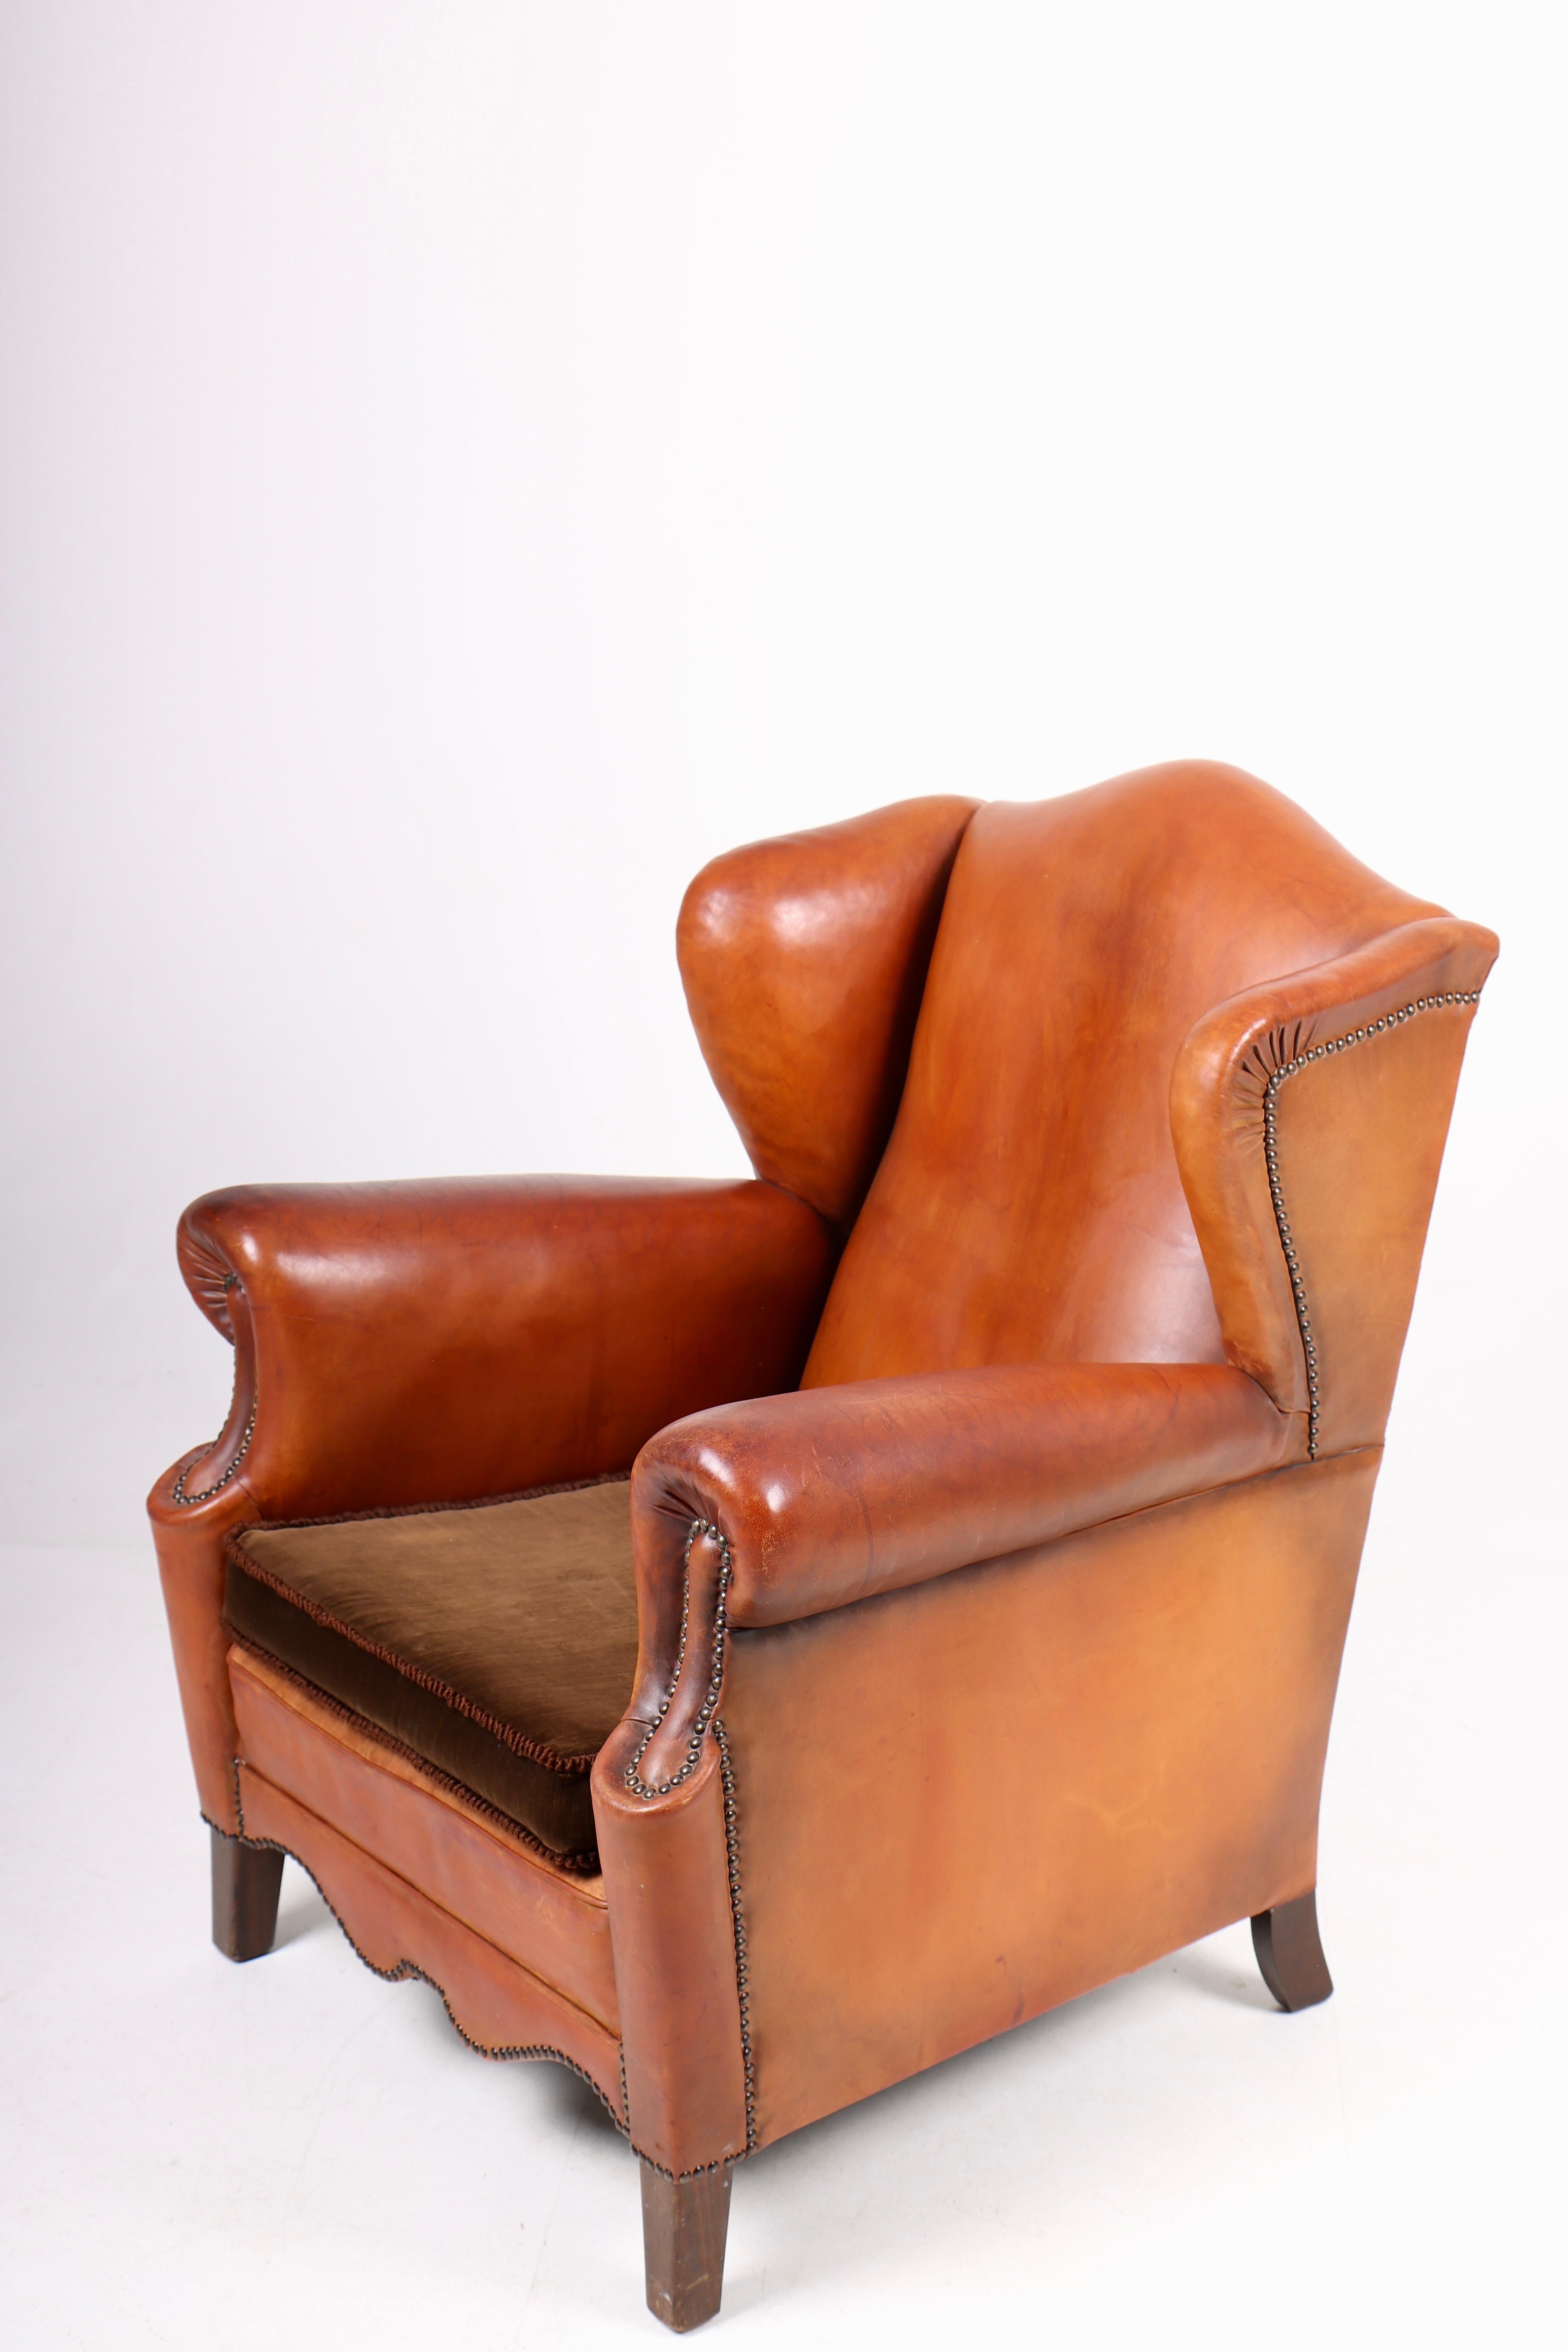 Scandinavian Modern Wingback Chair in Cognac Leather, Denmark, 1940s For Sale